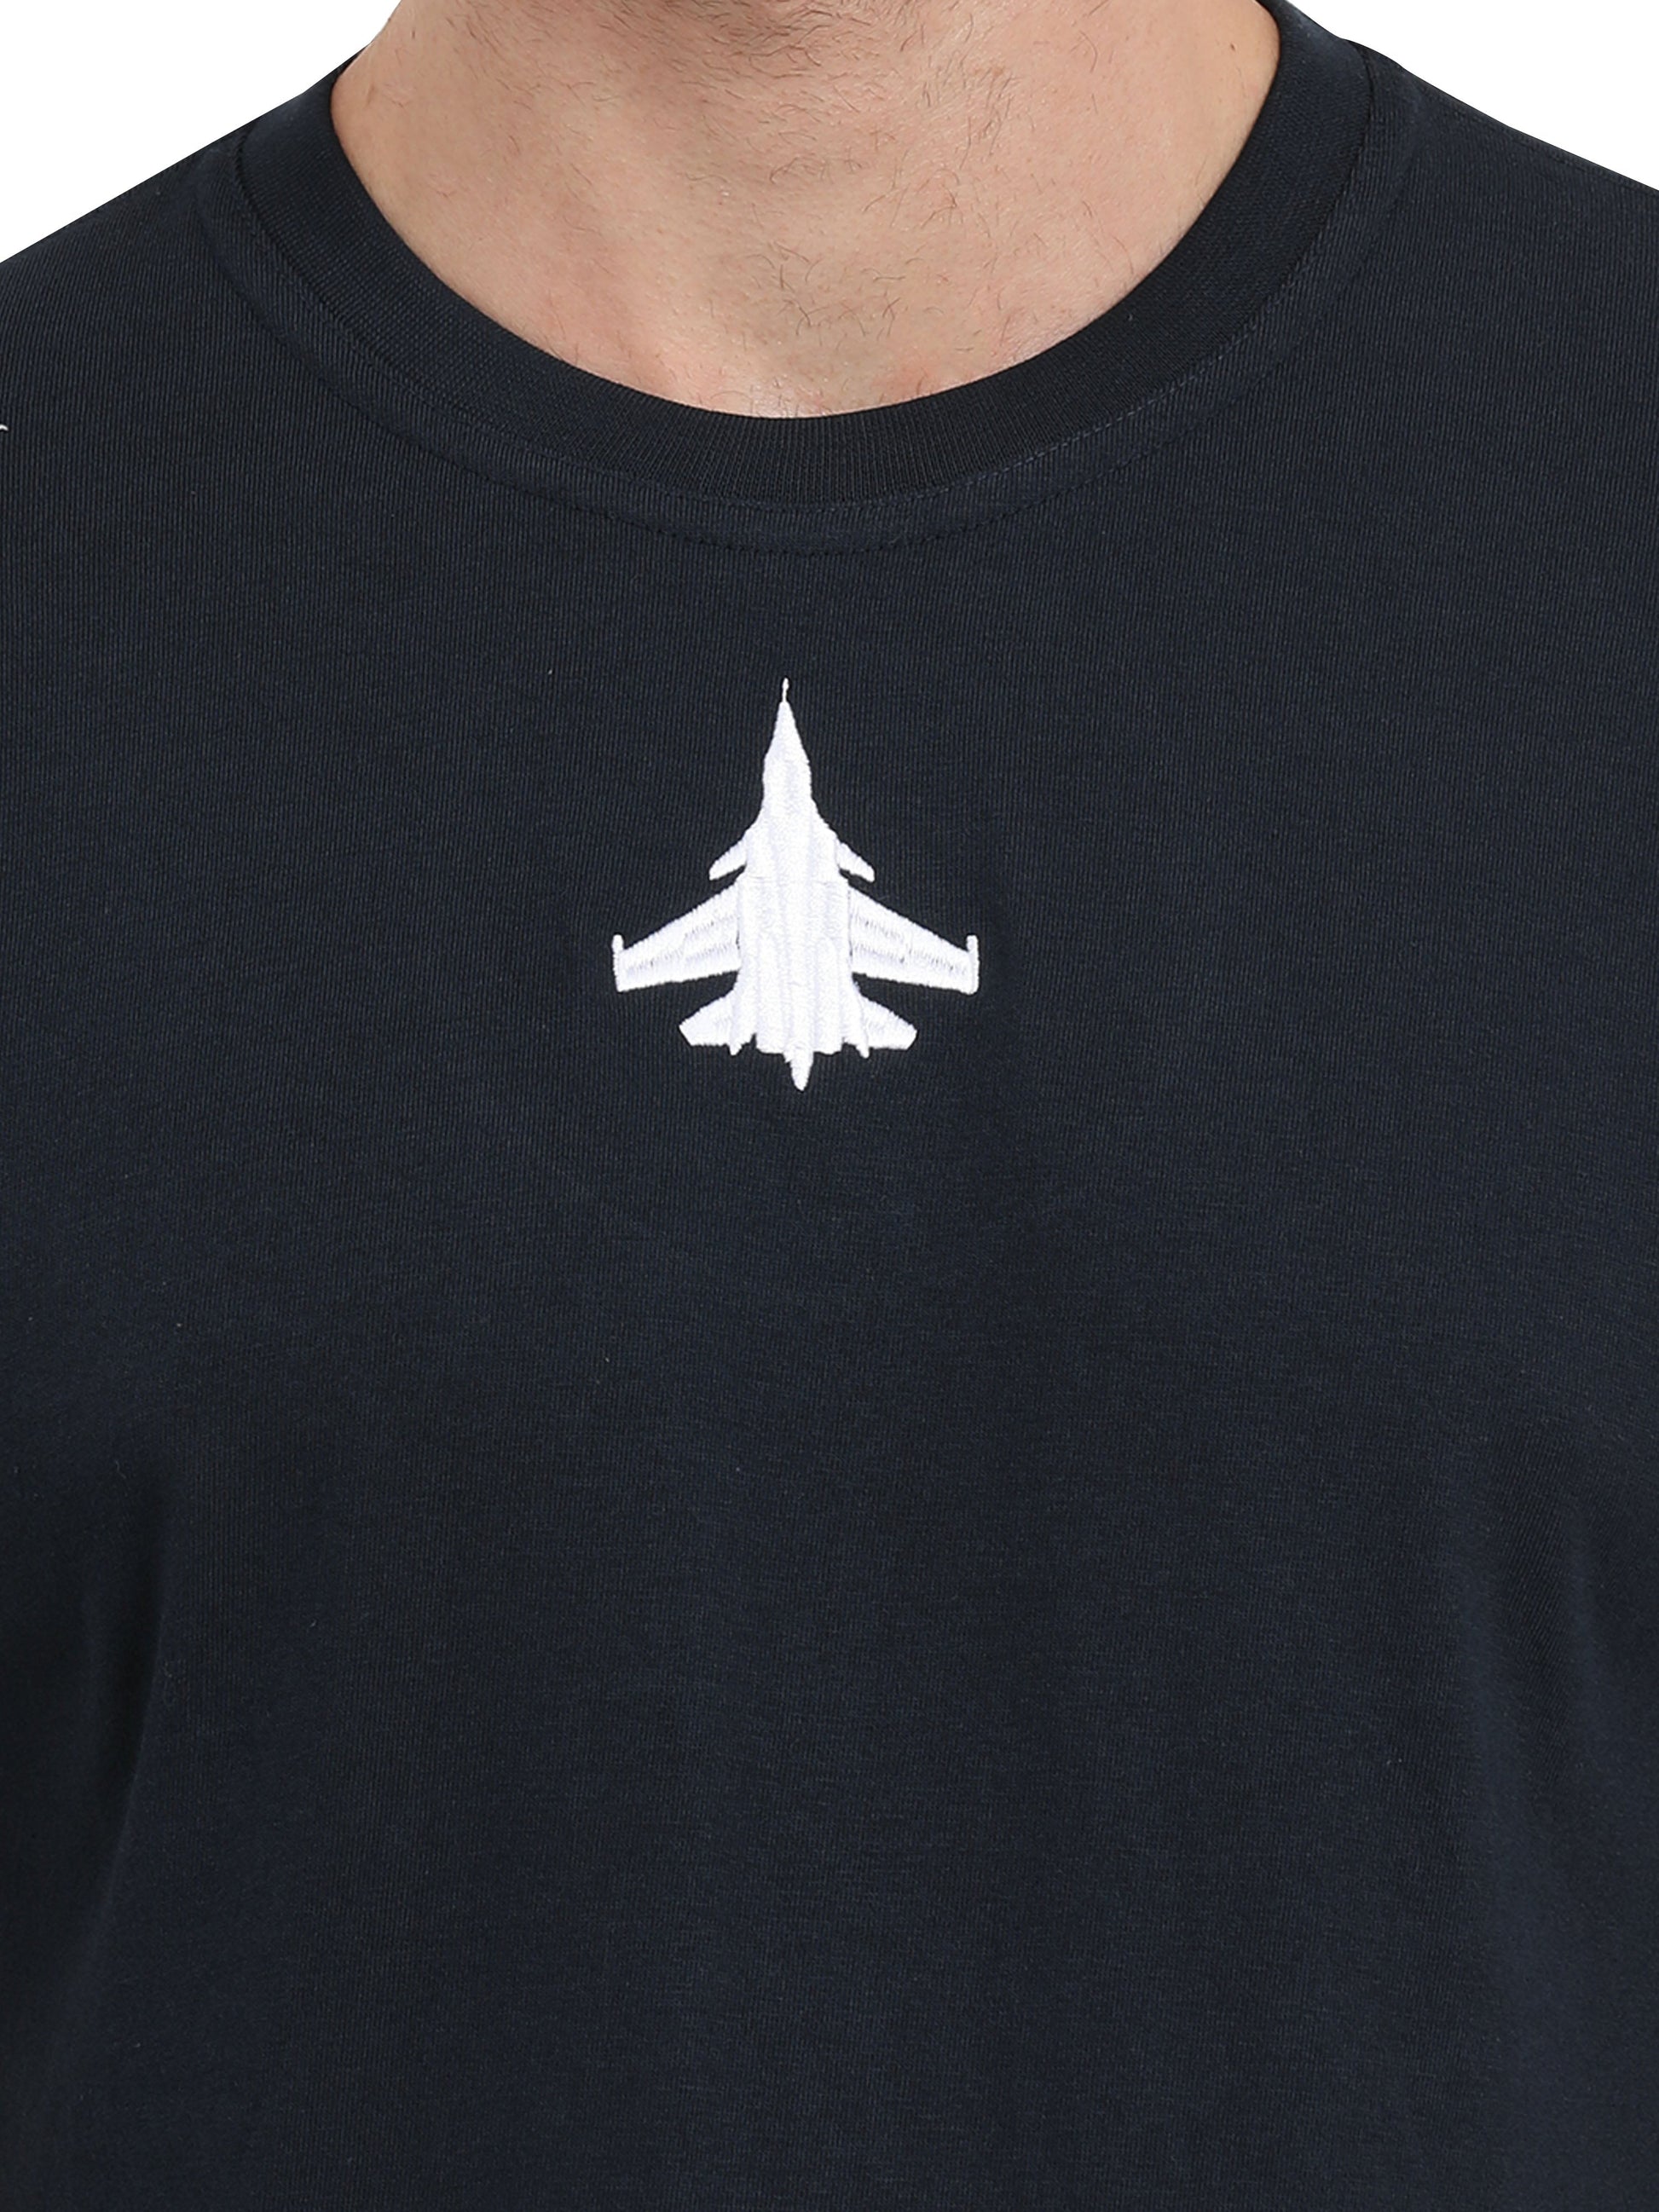 Round Neck Sukhoi Fighter Jet T Shirts for men